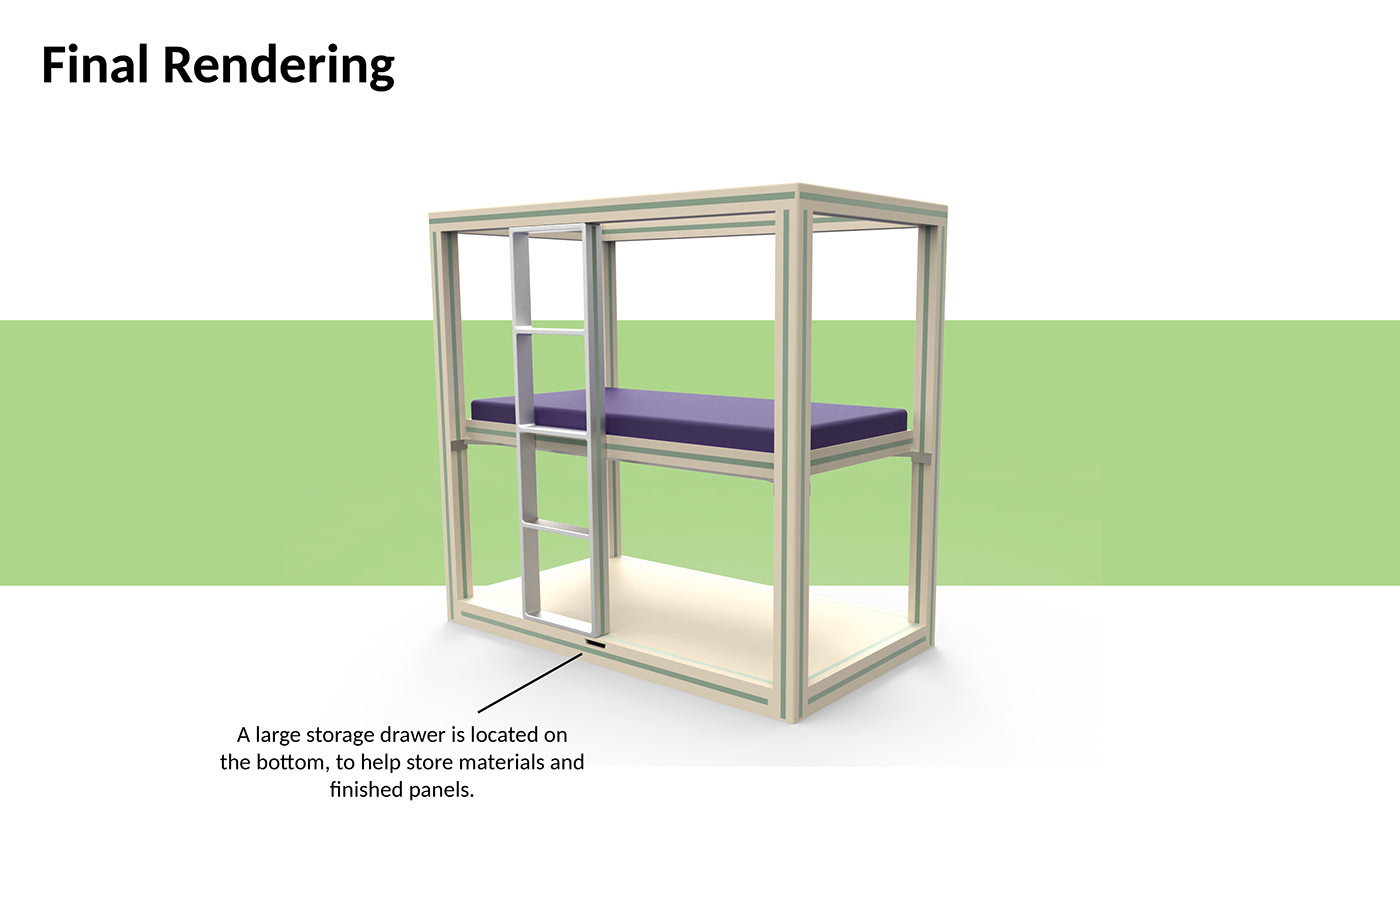 industrial design  product design  sleep fort bed children velcro ladder modular creative